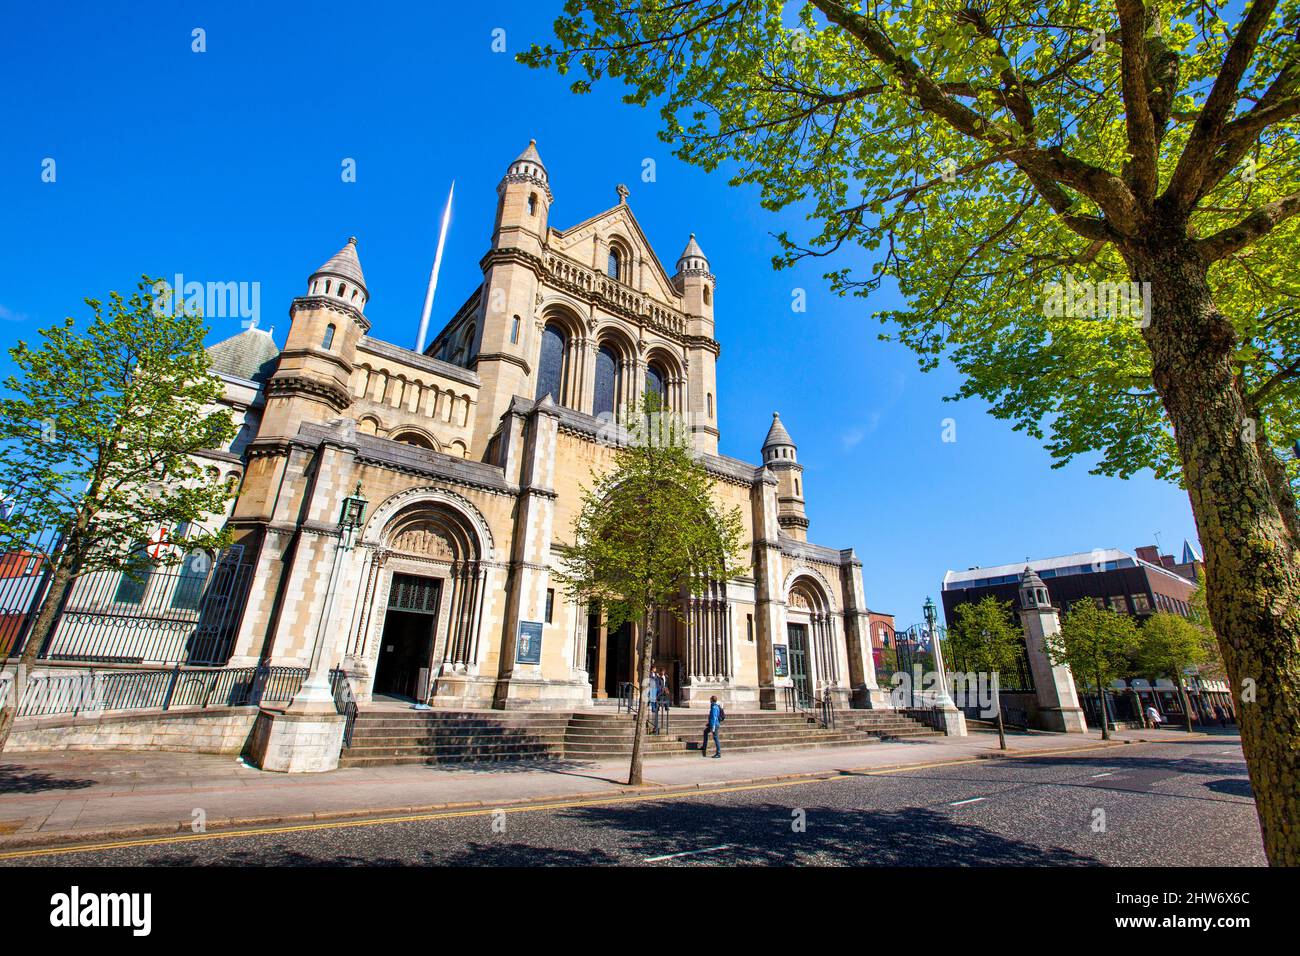 Eglise d'Irlande Cathédrale de Belfast, Writers Square, Irlande du Nord Banque D'Images